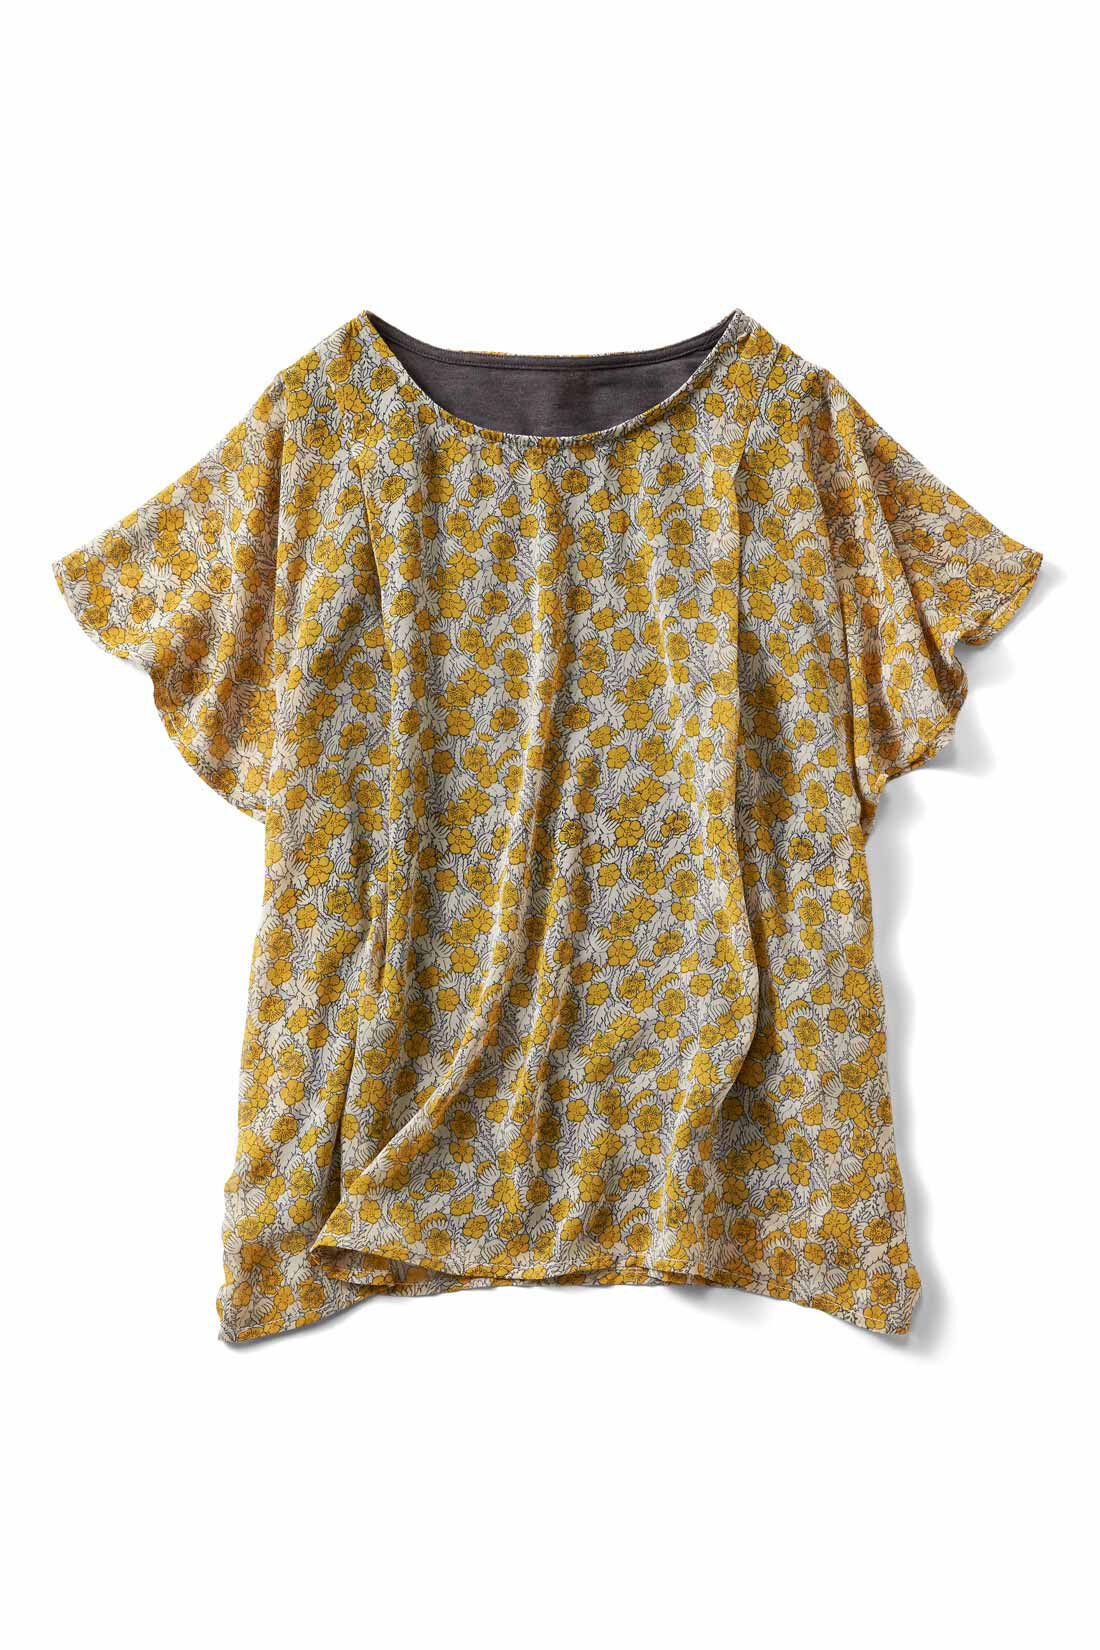 Real Stock|リブ イン コンフォート　Tシャツ感覚で着られる ひらり花柄シフォントップス〈イエロー×グレー〉